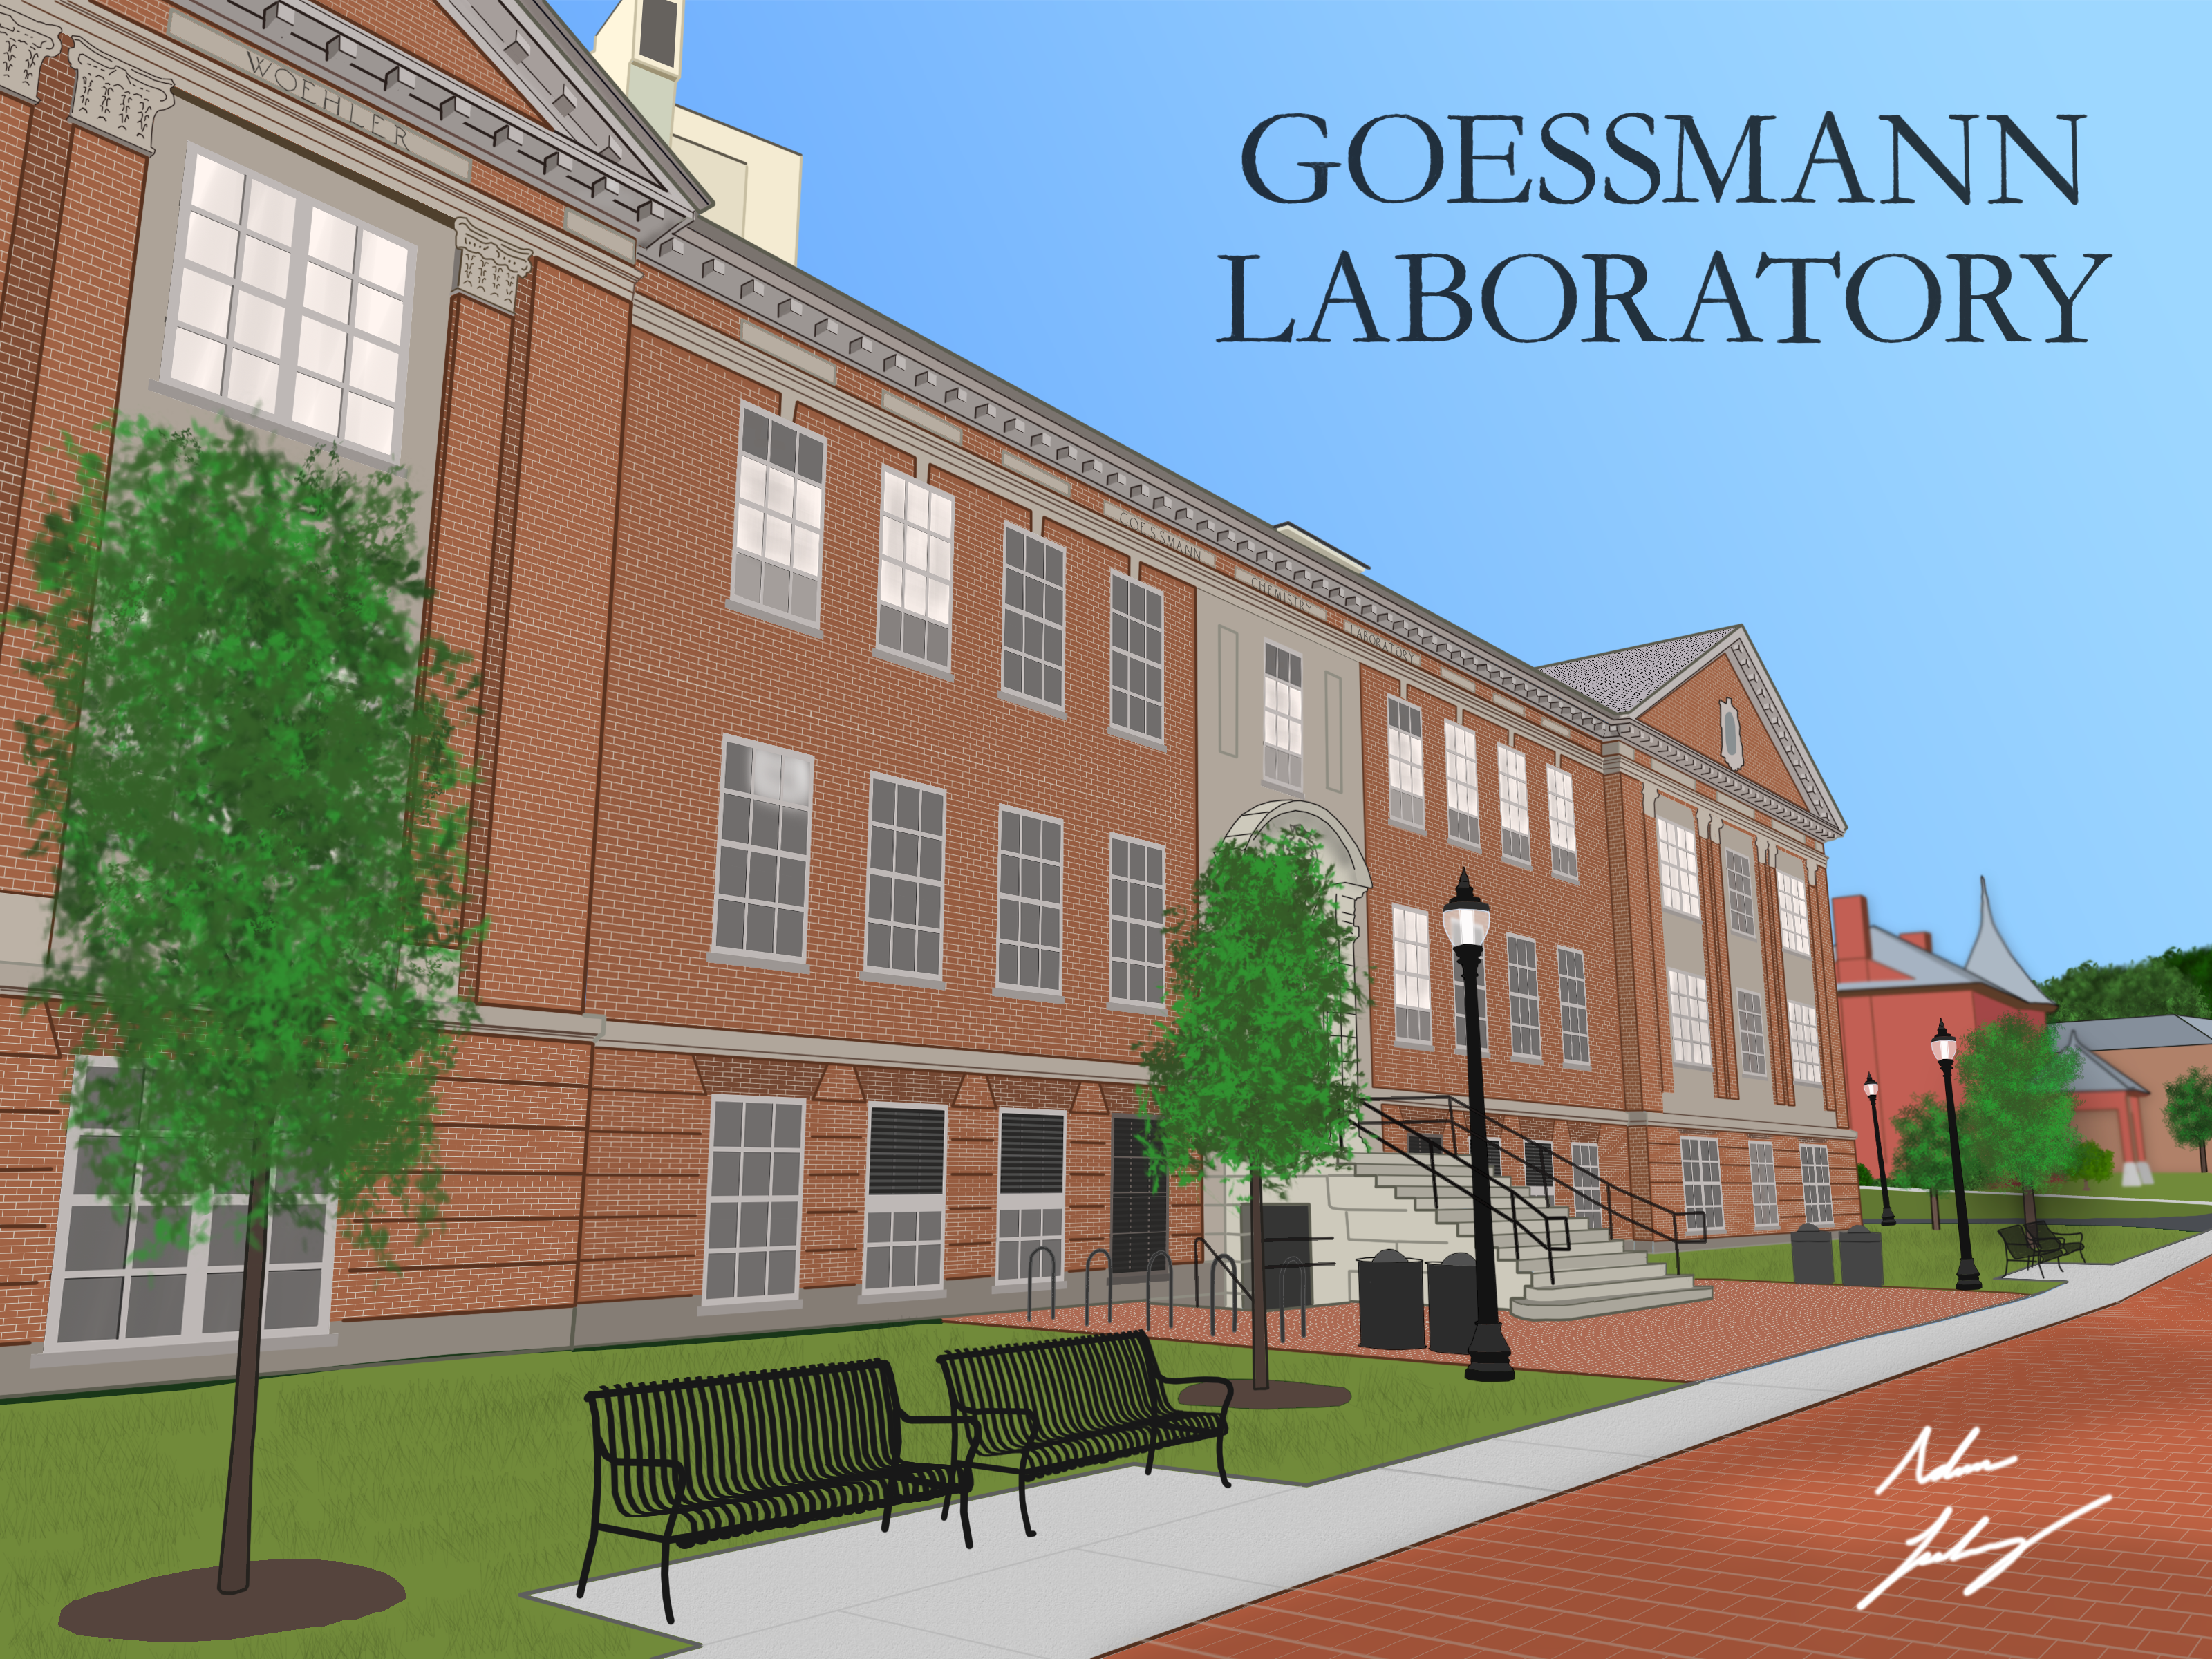 A drawing of Goessmann Laboratory at UMass